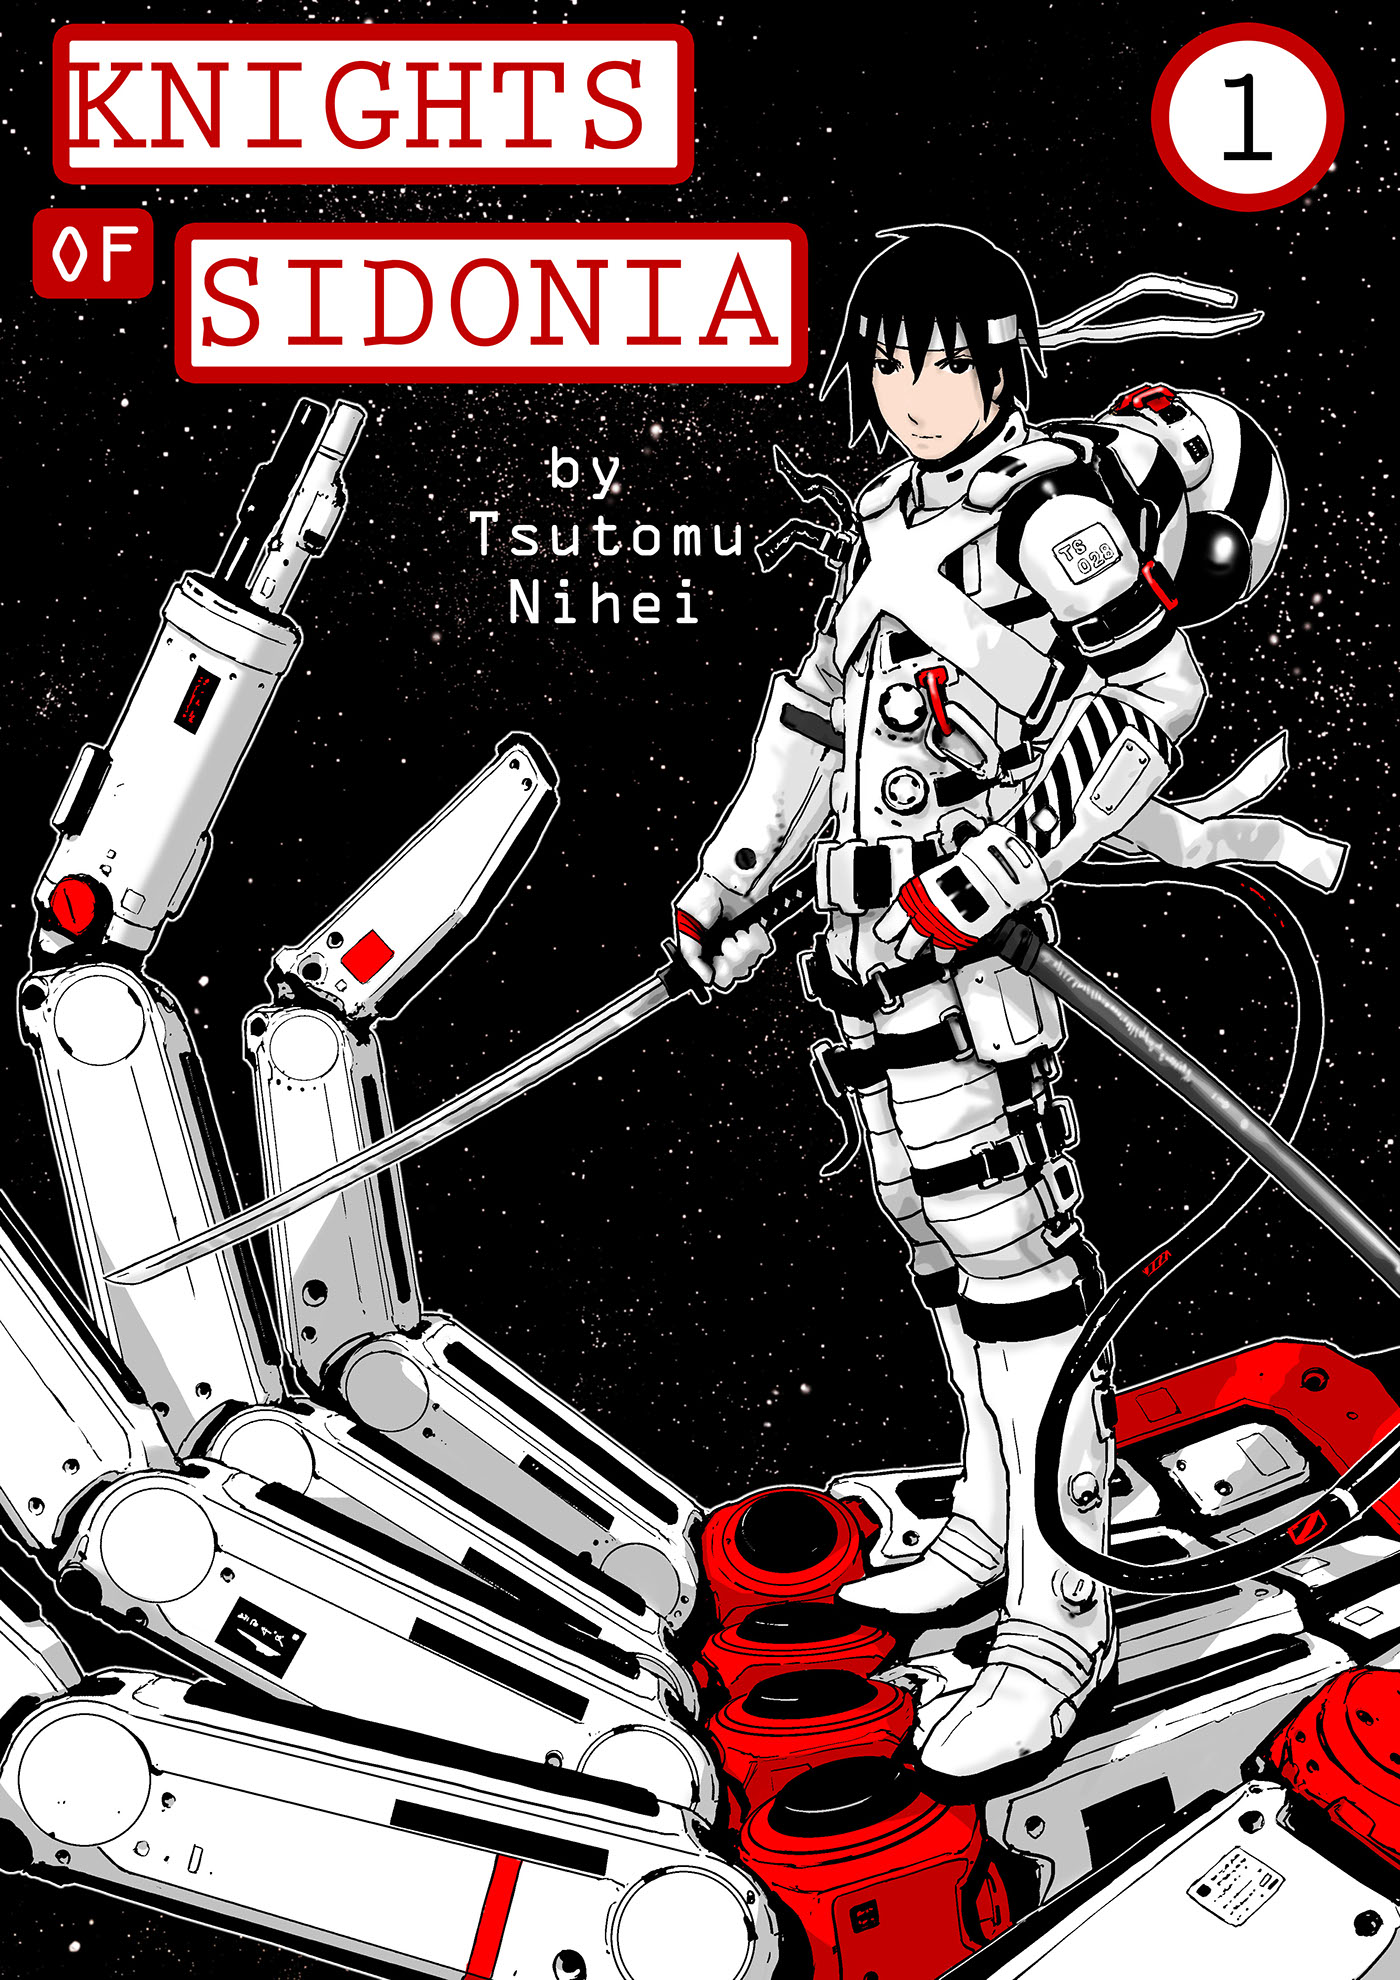 manga design cover graphic digital vertical